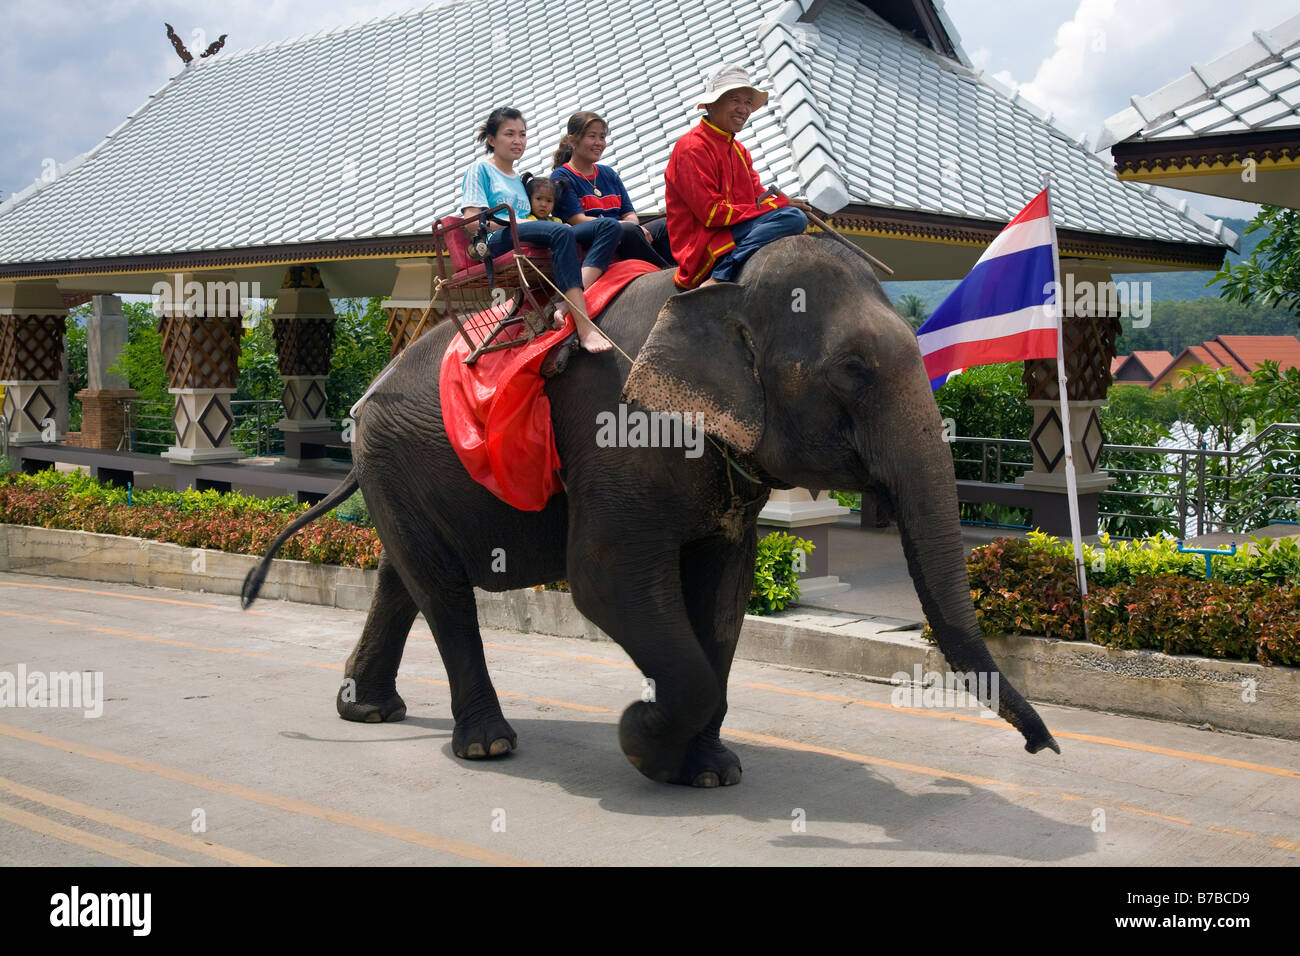 Pleasure riders   Tourists Elephant riding at Huaymongkol, Southern Thailand, Asia Stock Photo